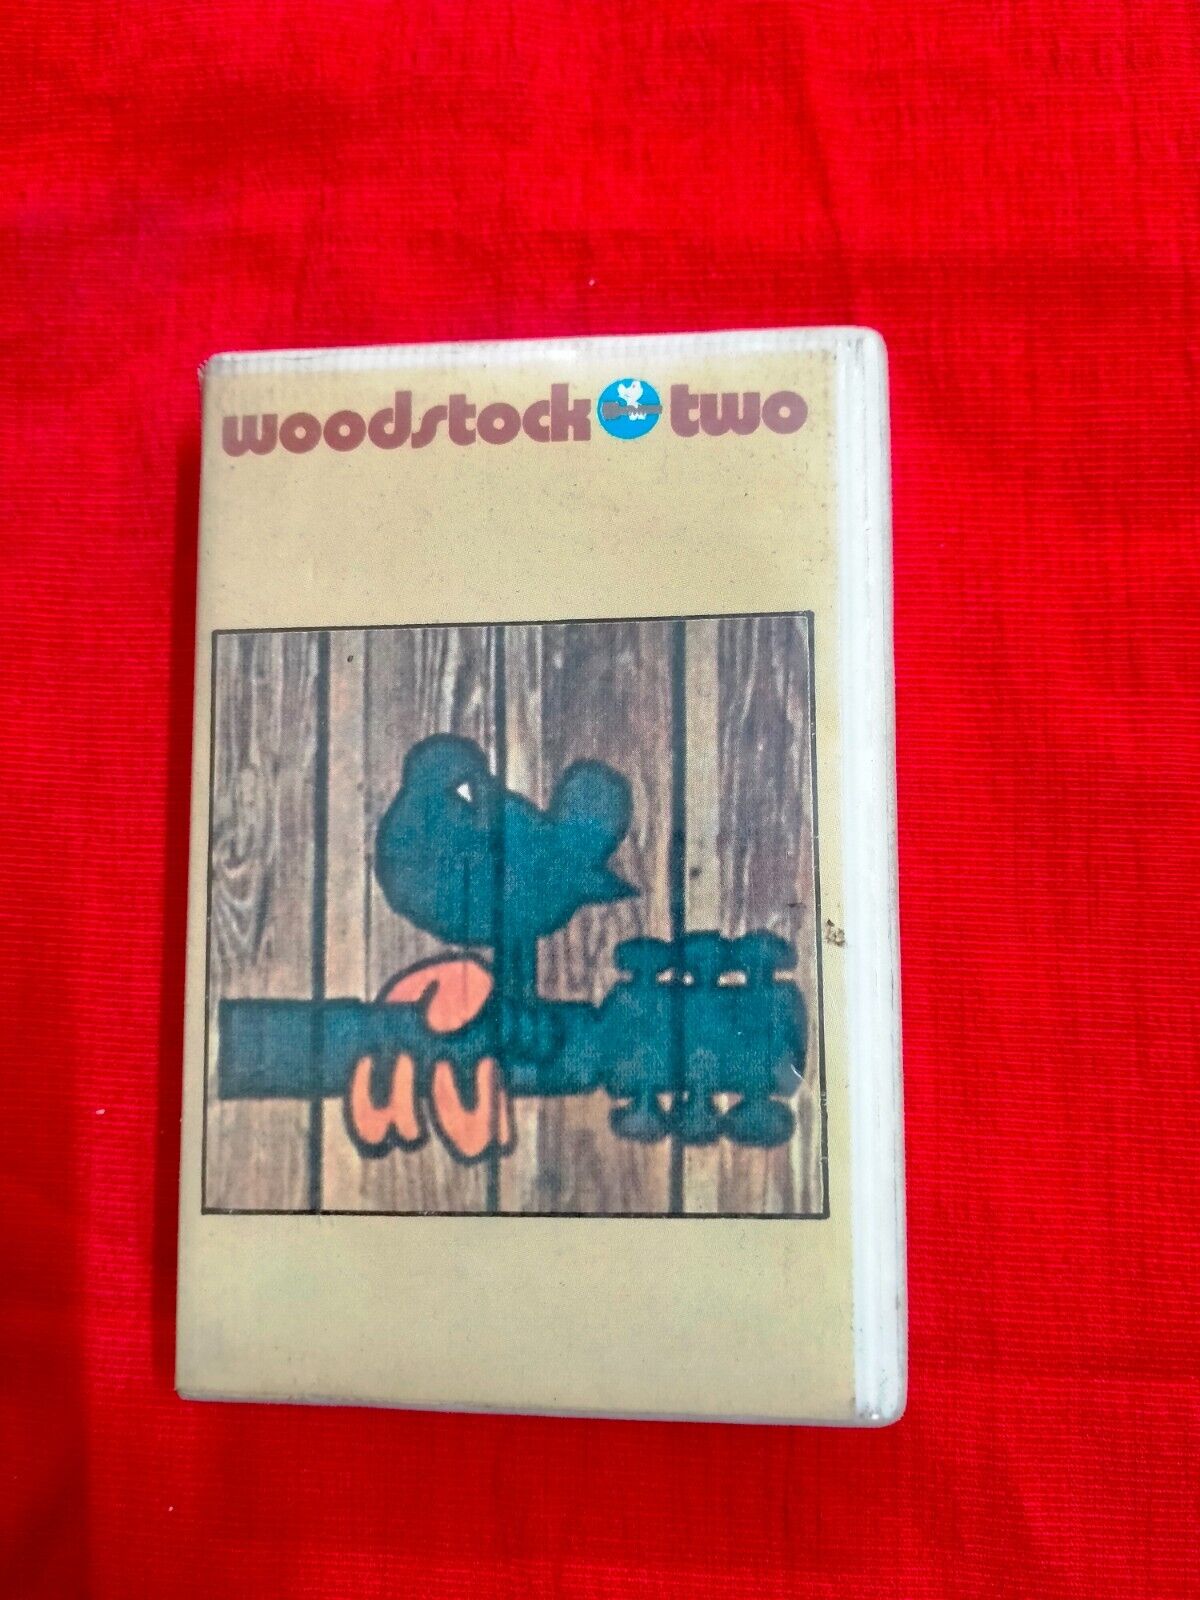 Woodstock two Cassette Two RARE orig Cassette tape India Clamshell 1993